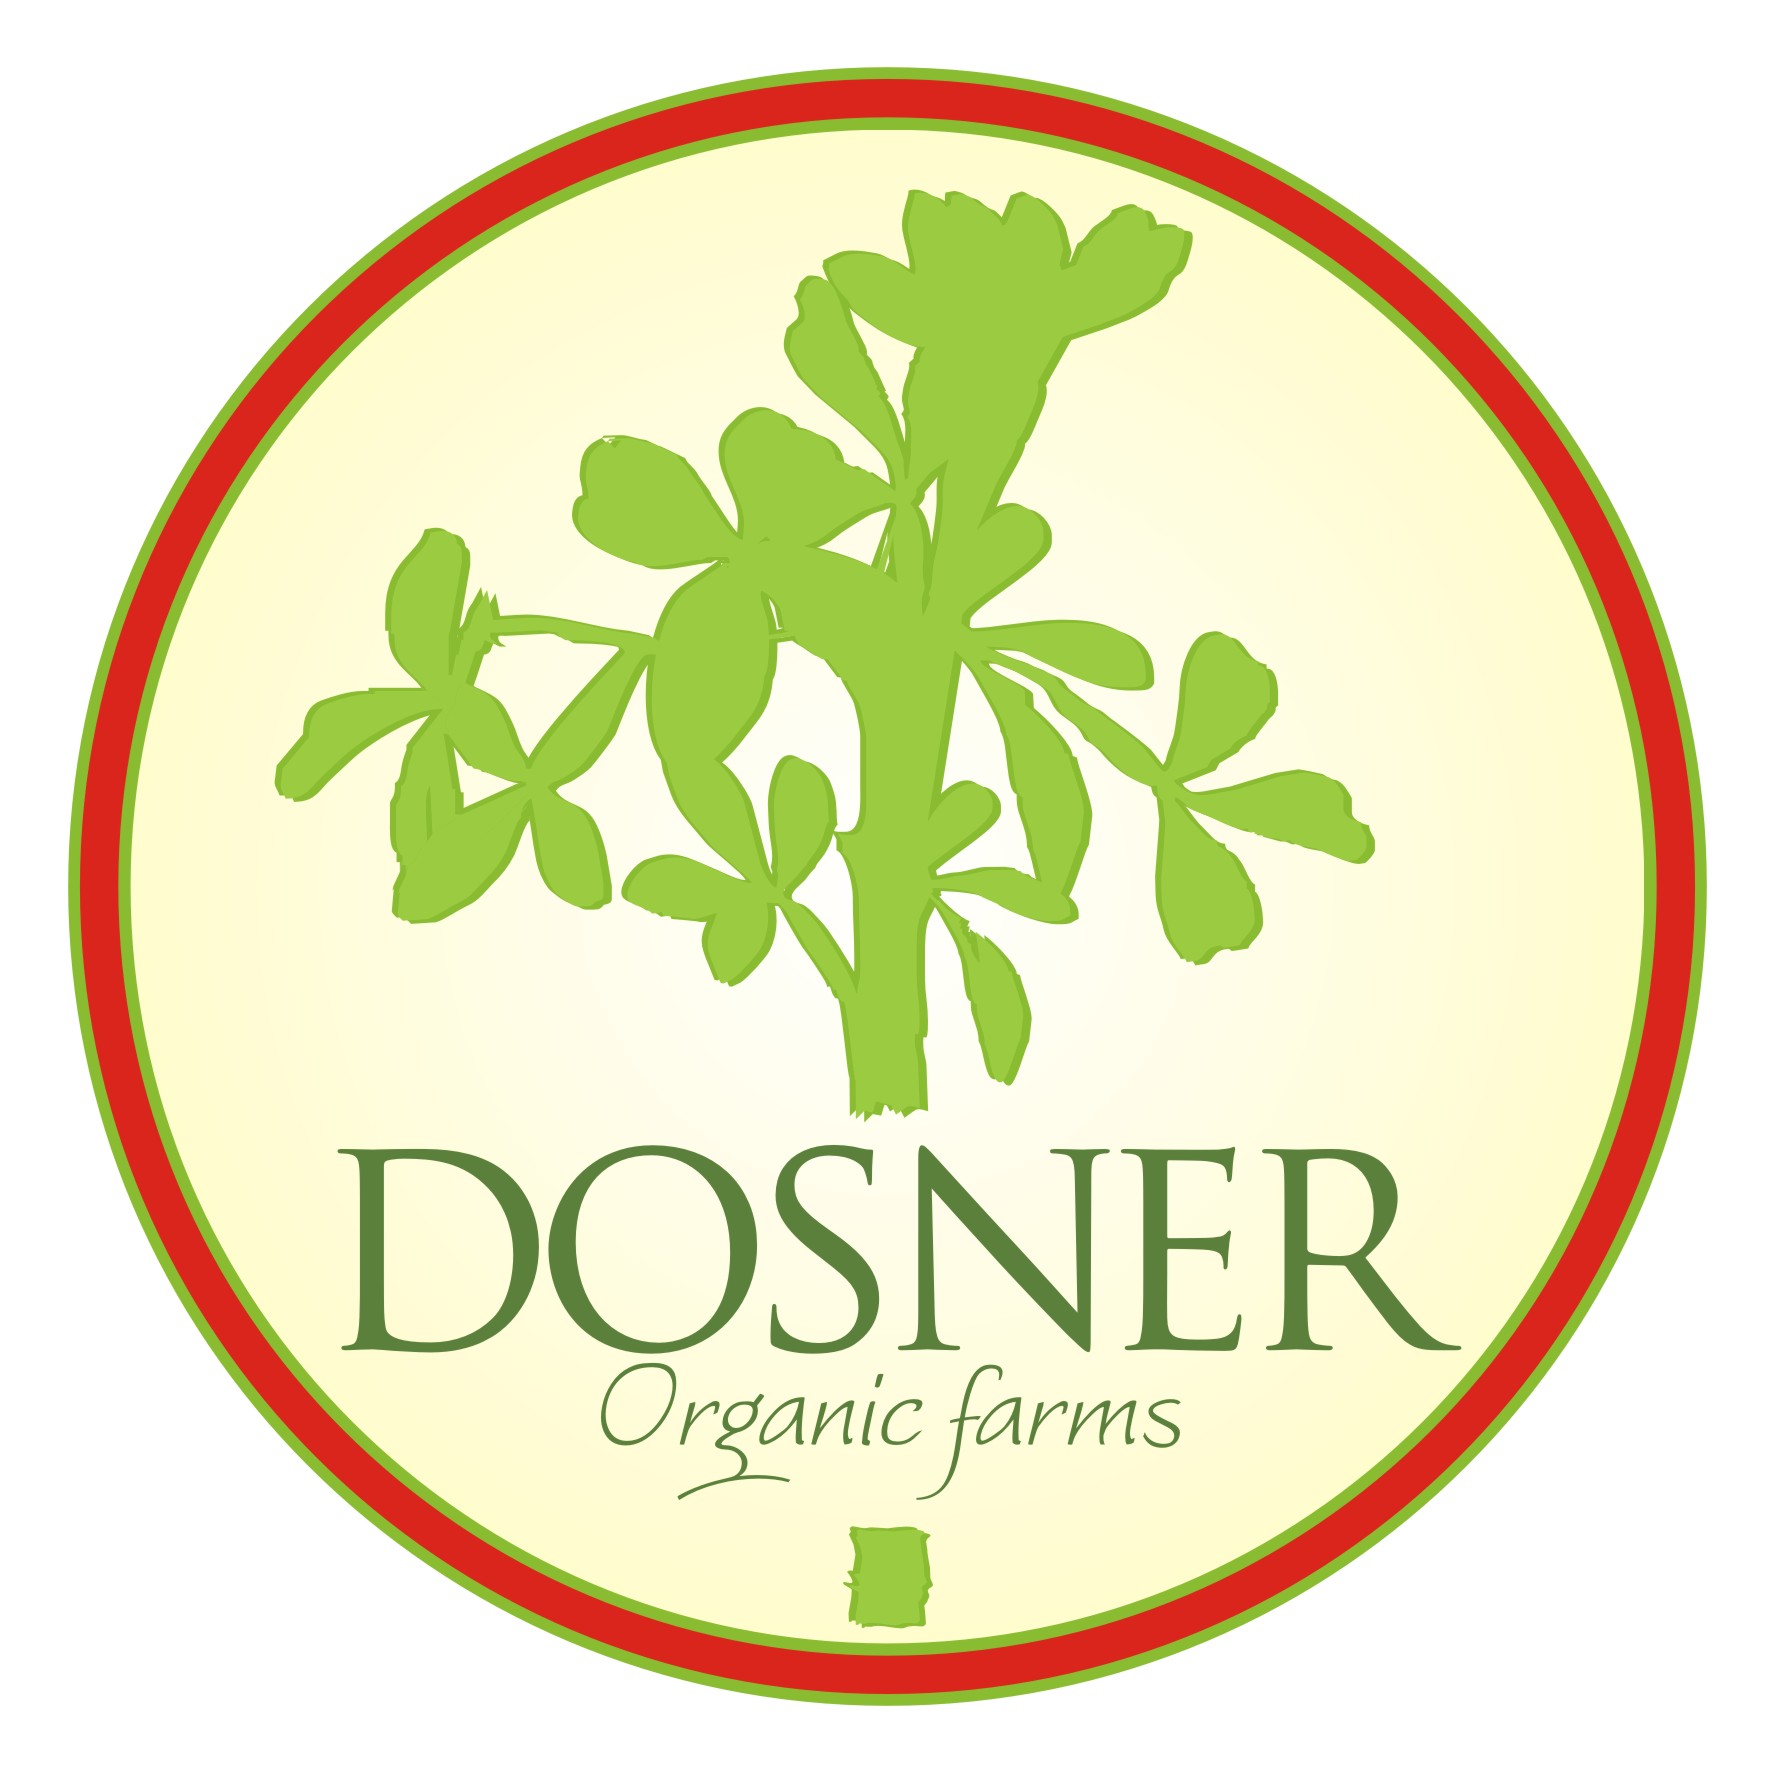 2Dosner Organic Farms